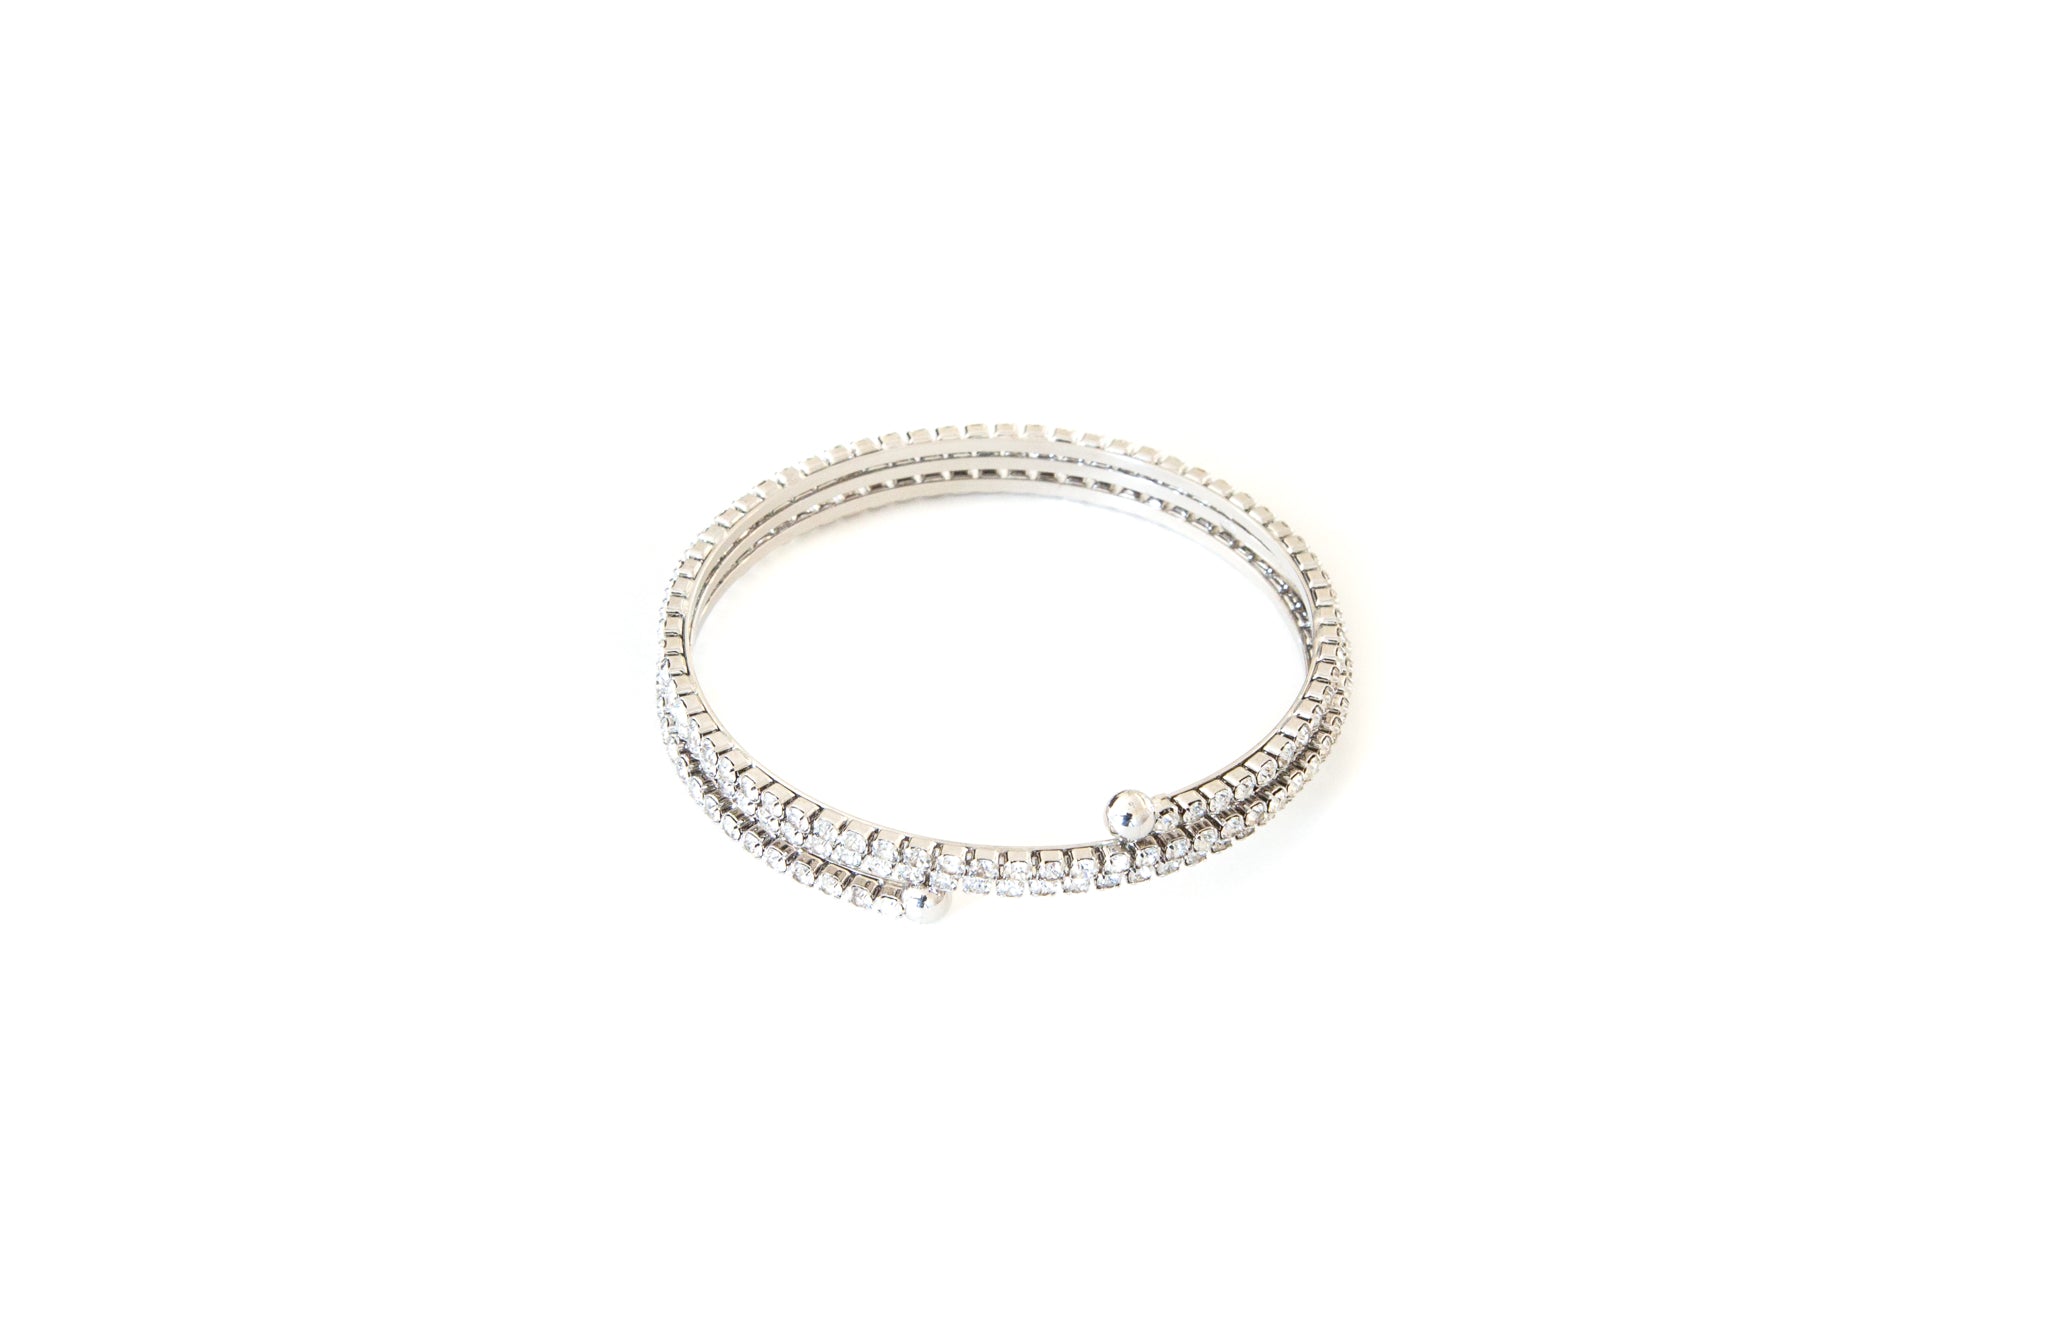 Accessories - Silver Bracelet